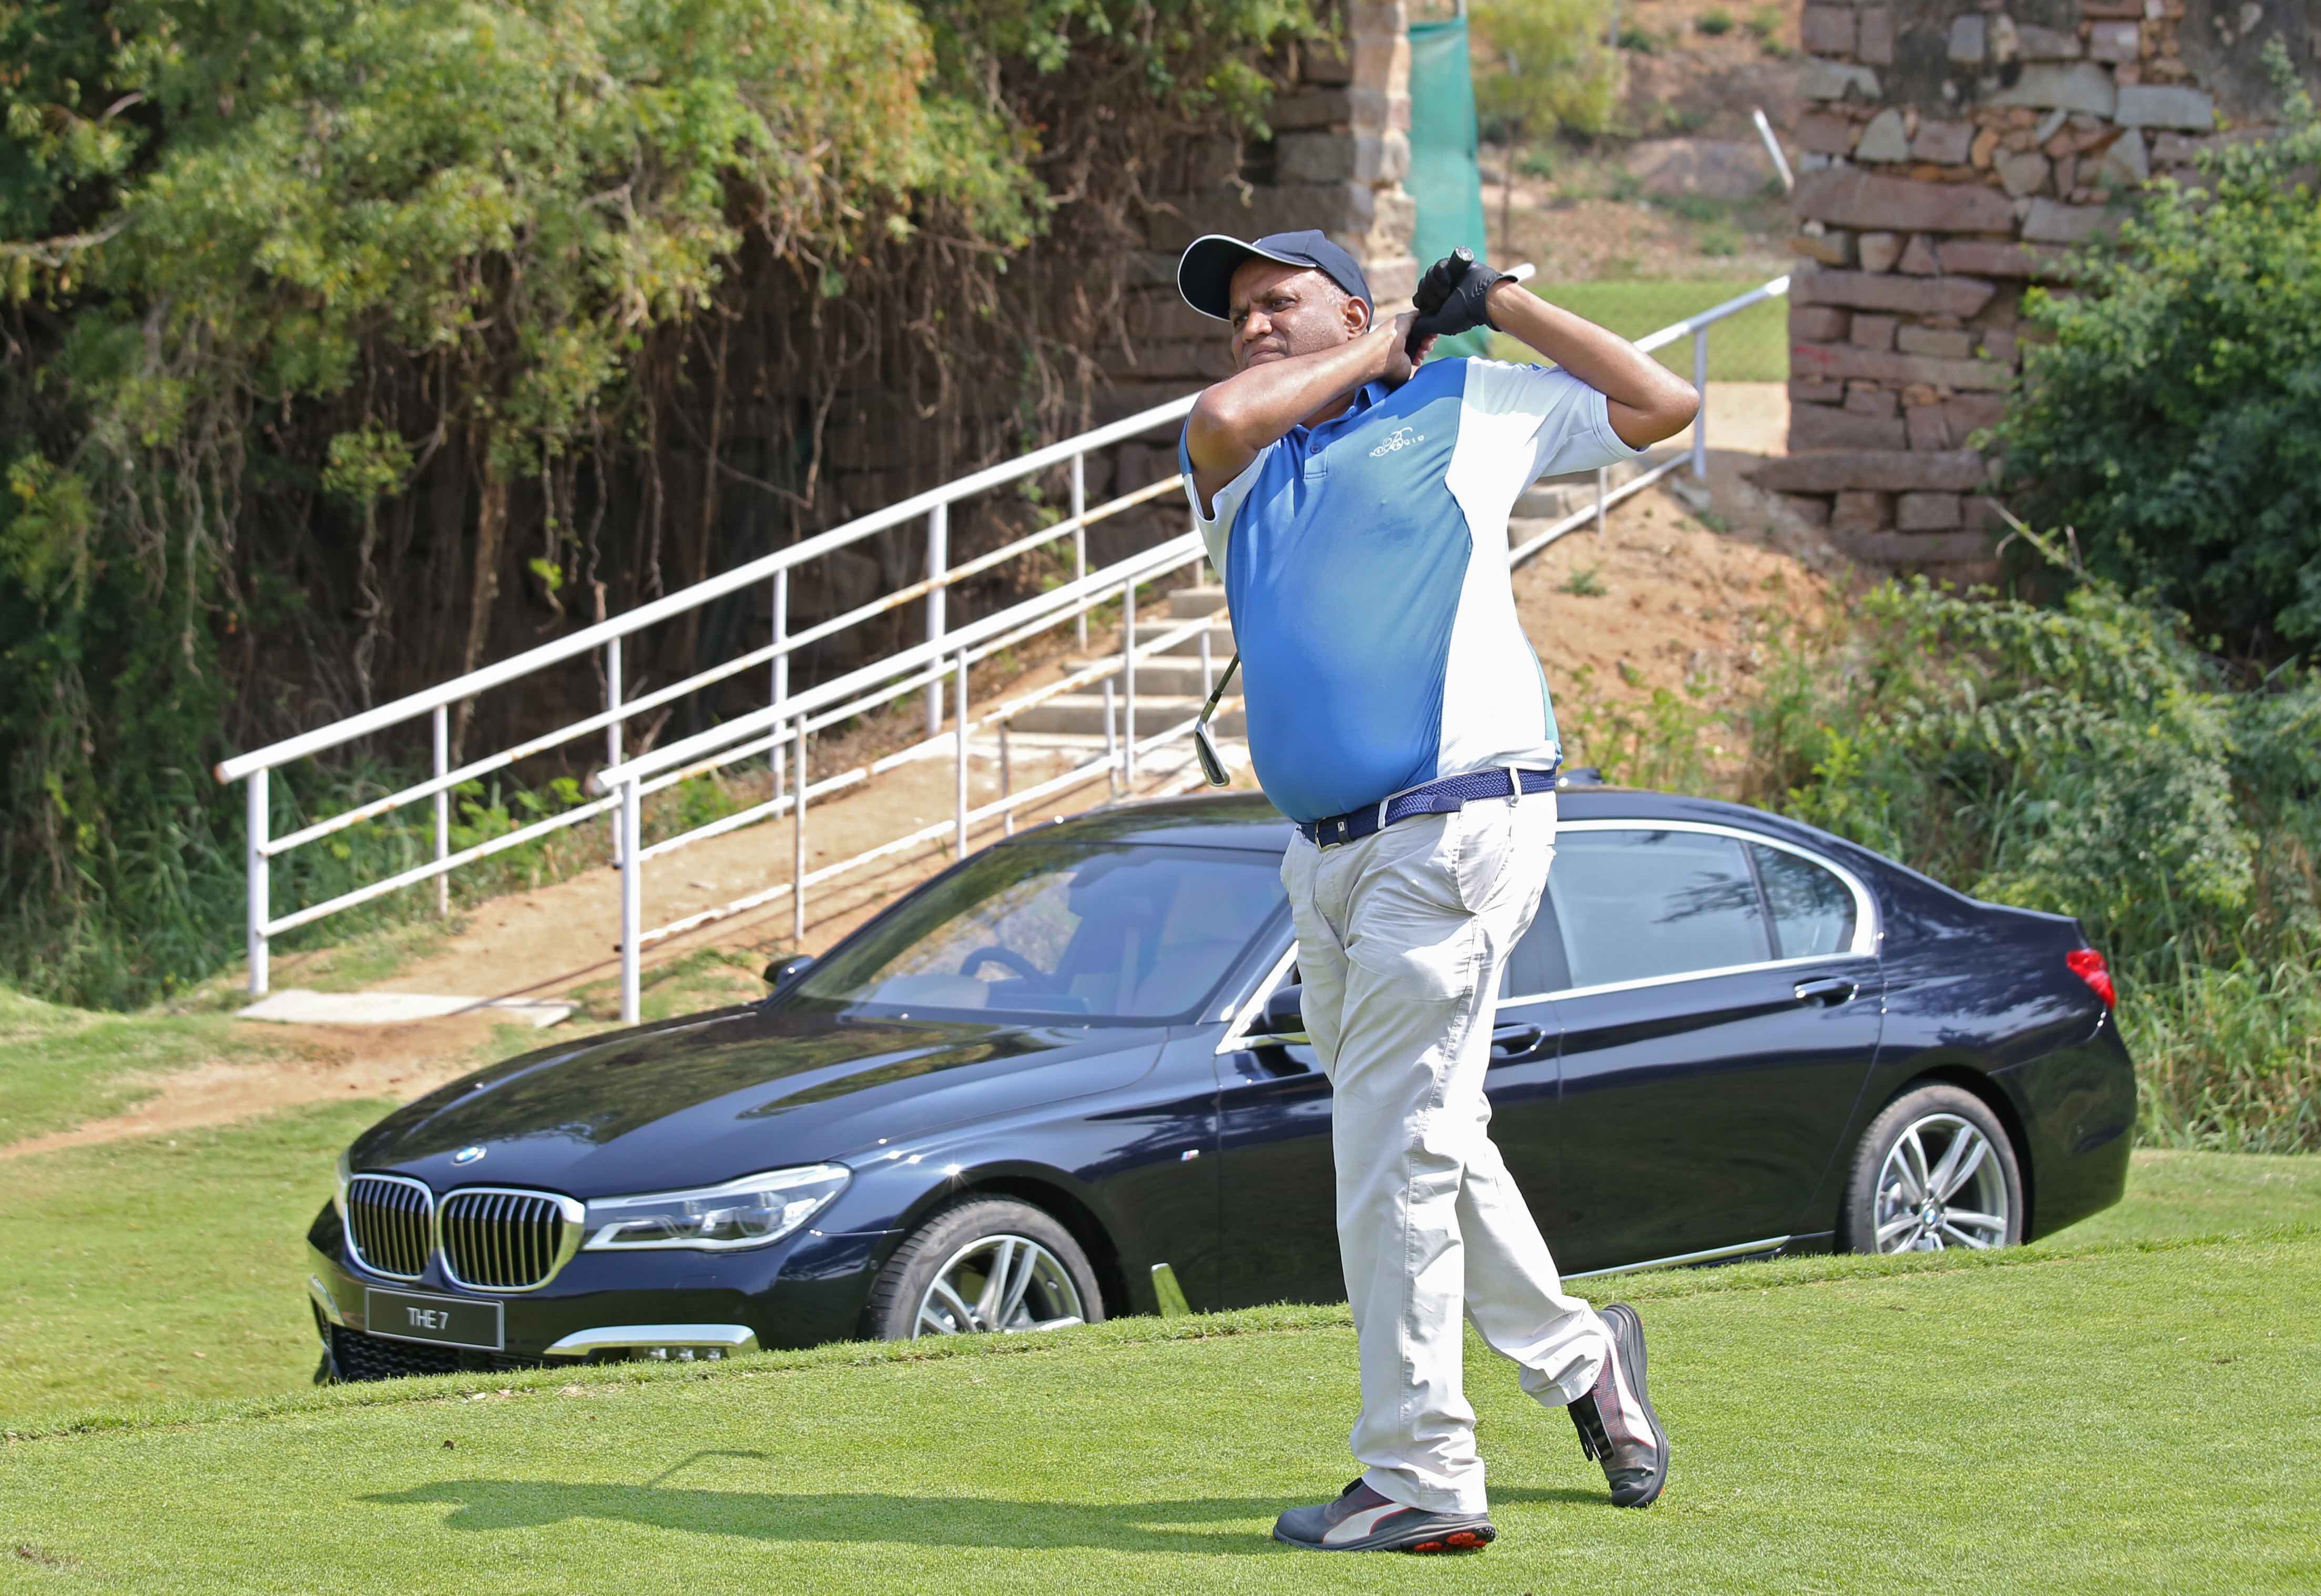 BMW Golf Cup International 2019 Held in Hyderabad.